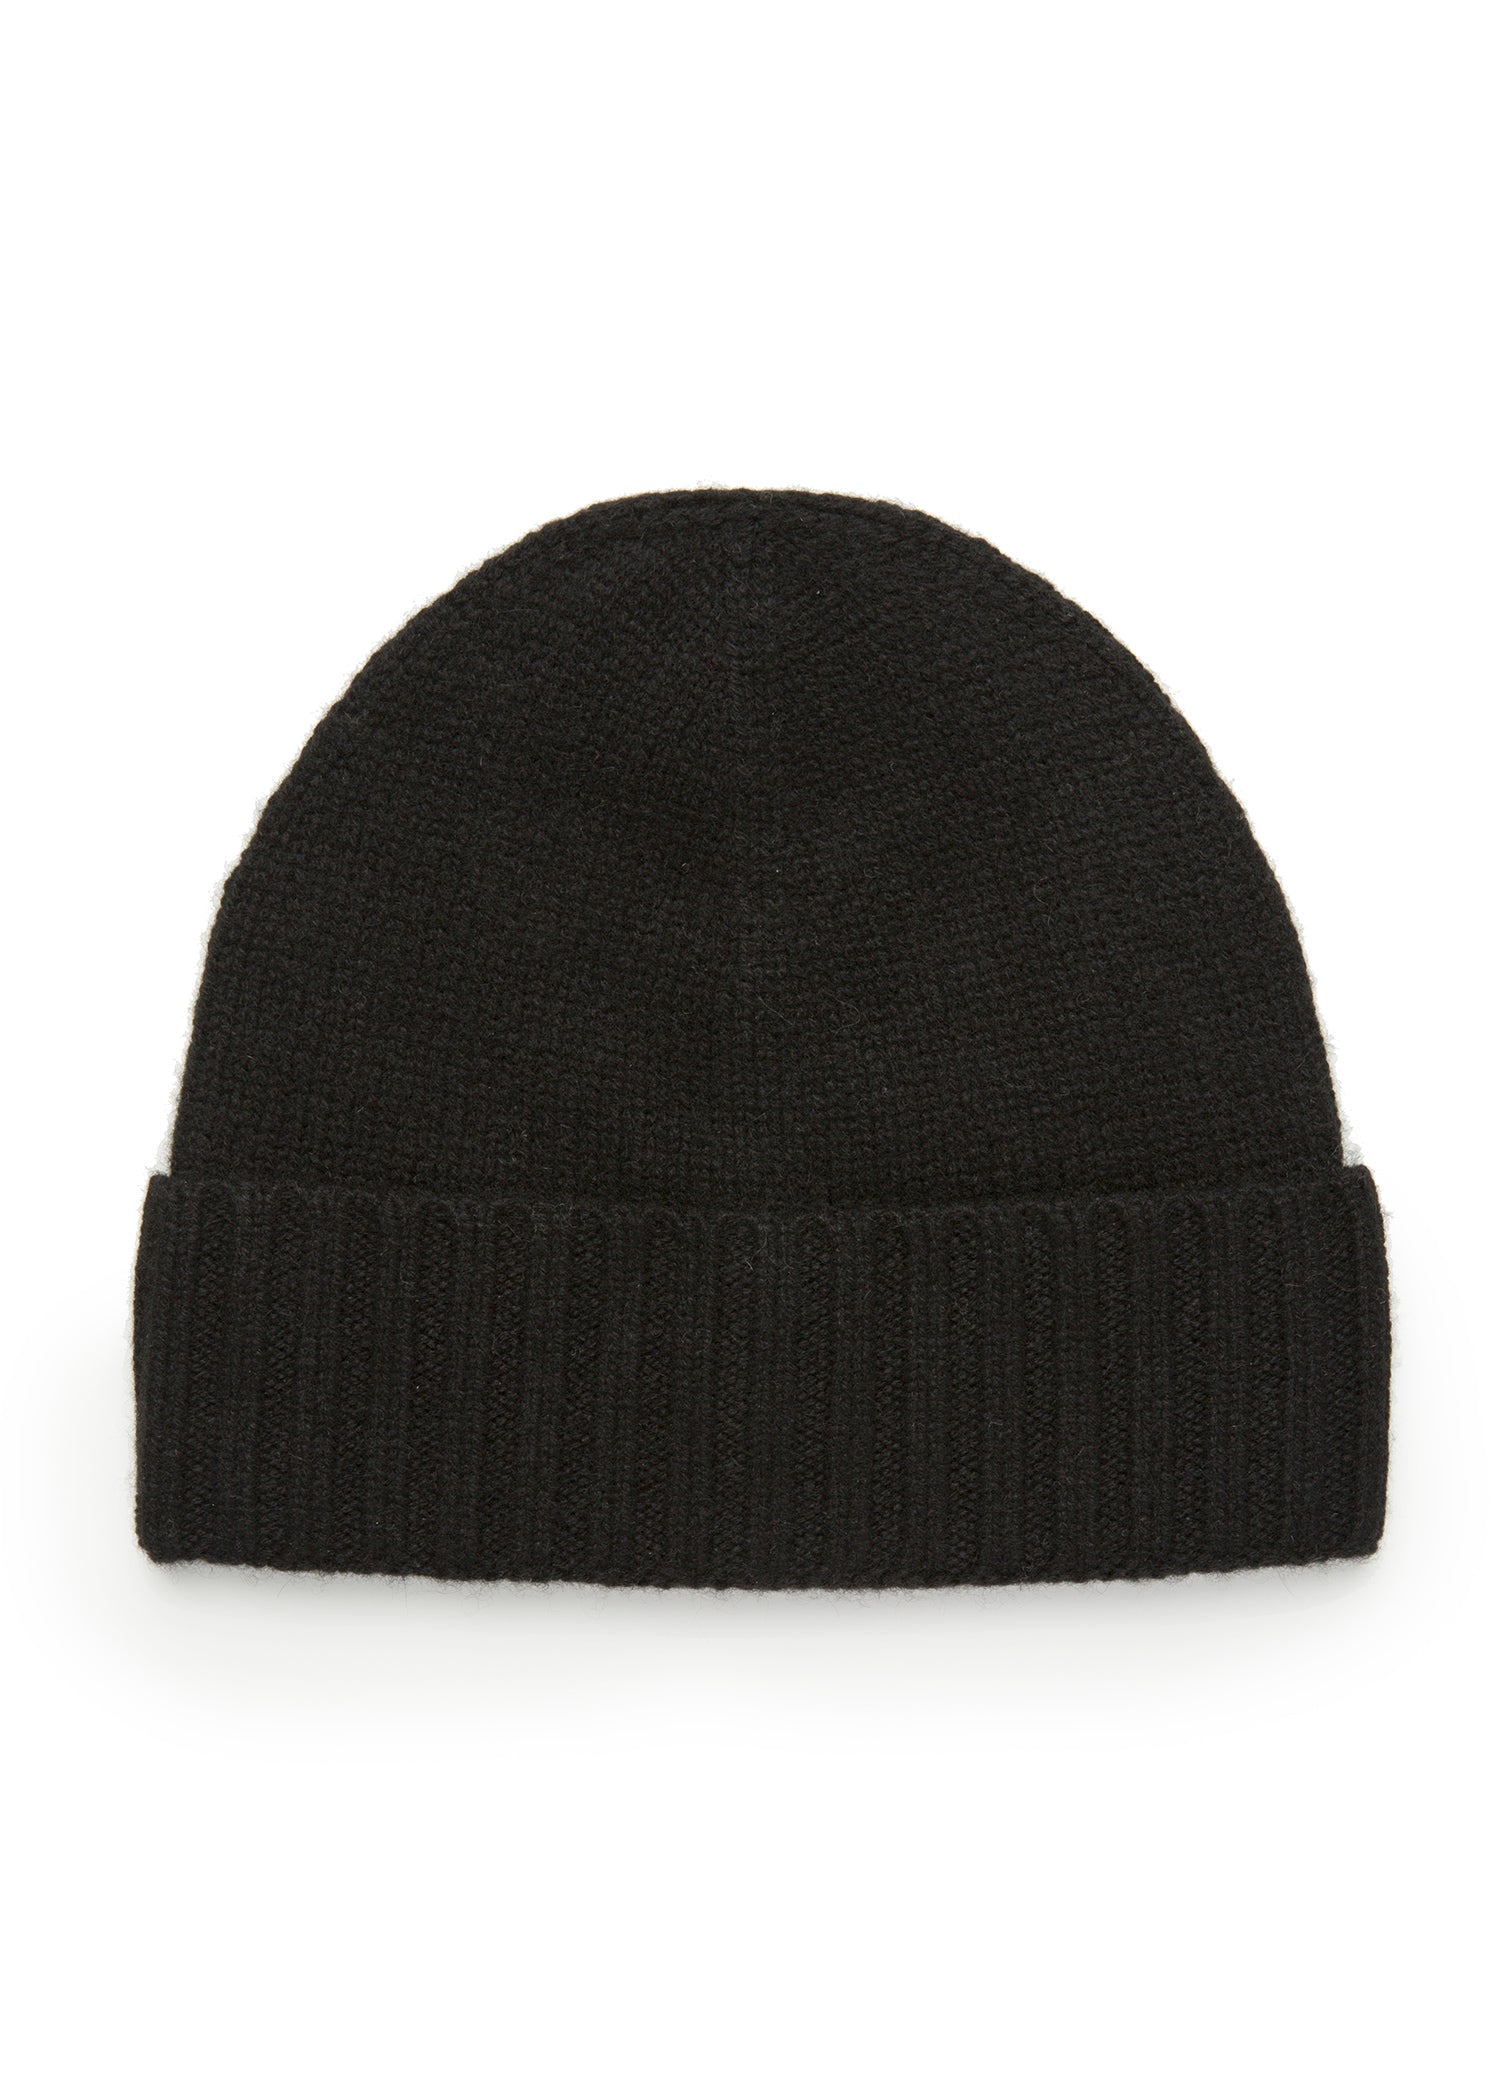 womens black cashmere beanie hat